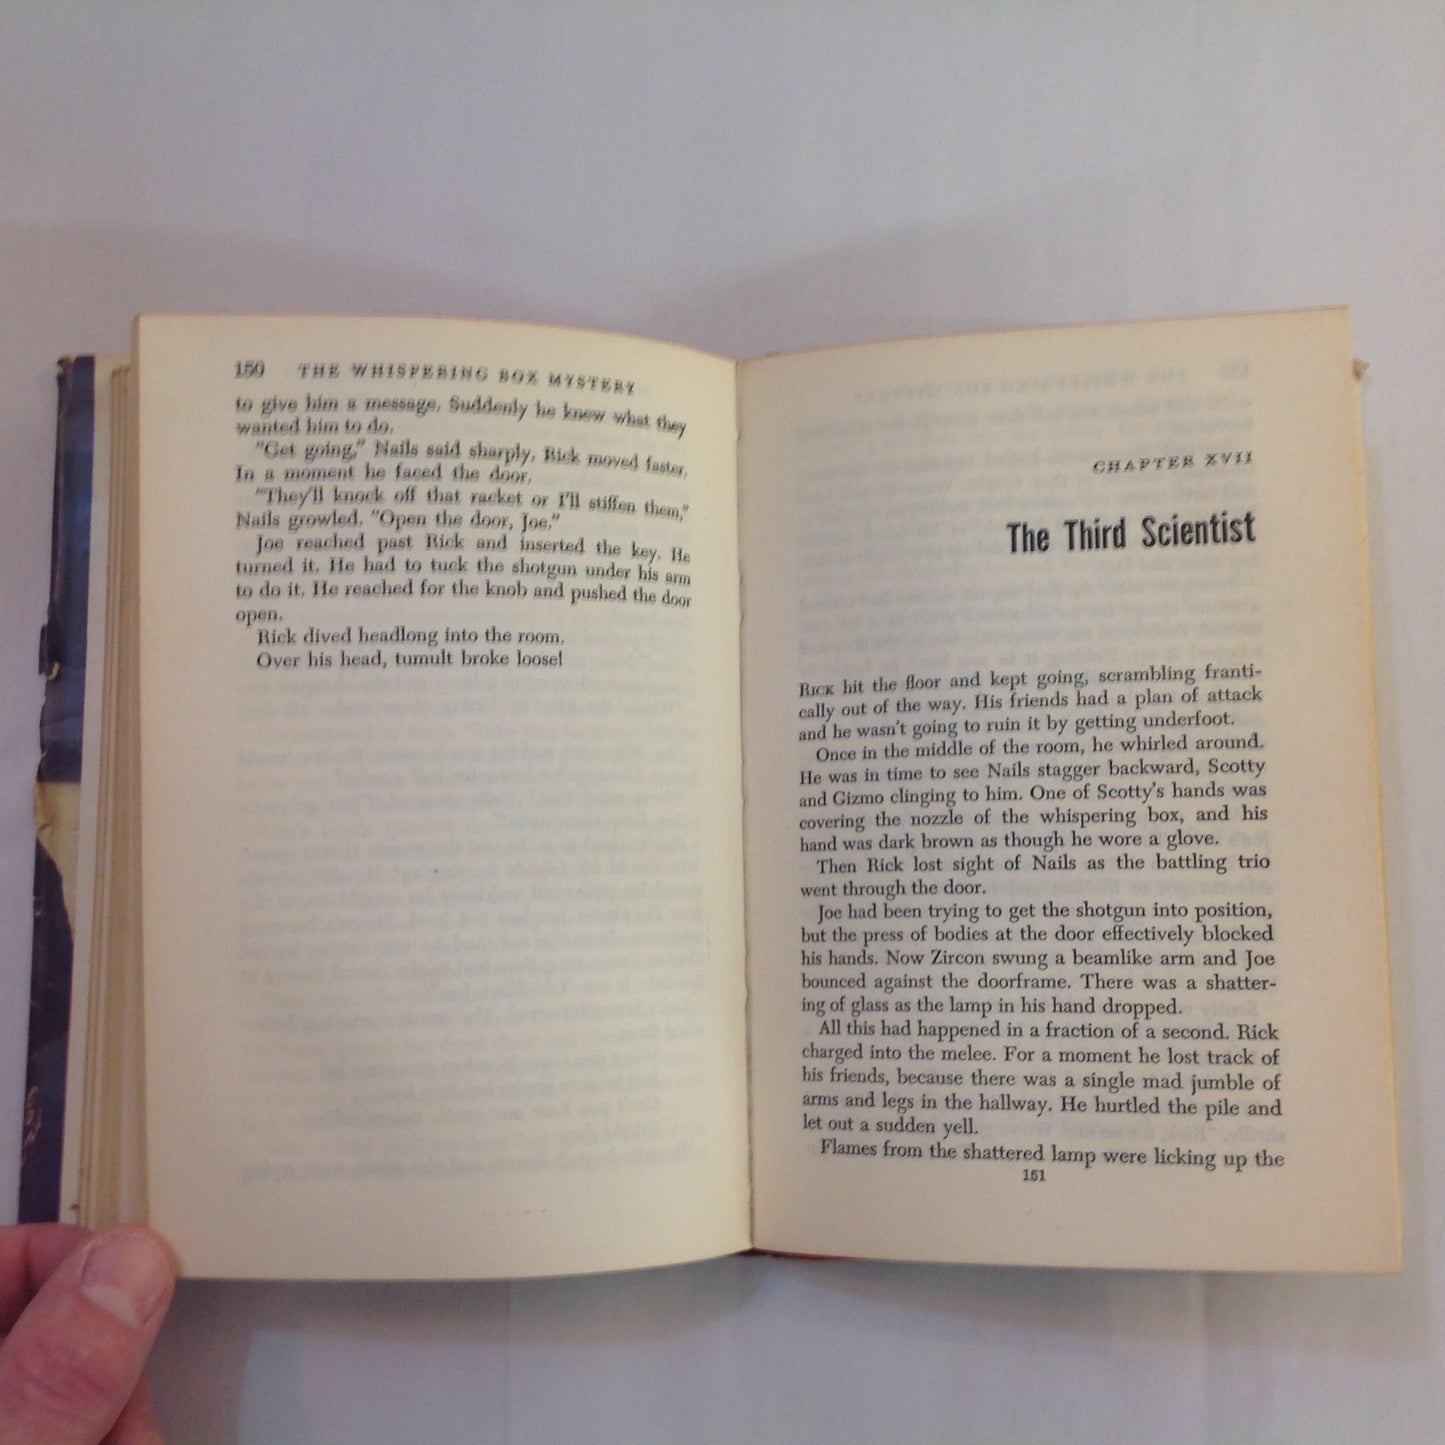 Vintage 1948 Hardcover The Whispering Box Mystery: A Rick Brant Science-Adventure Story John Blaine